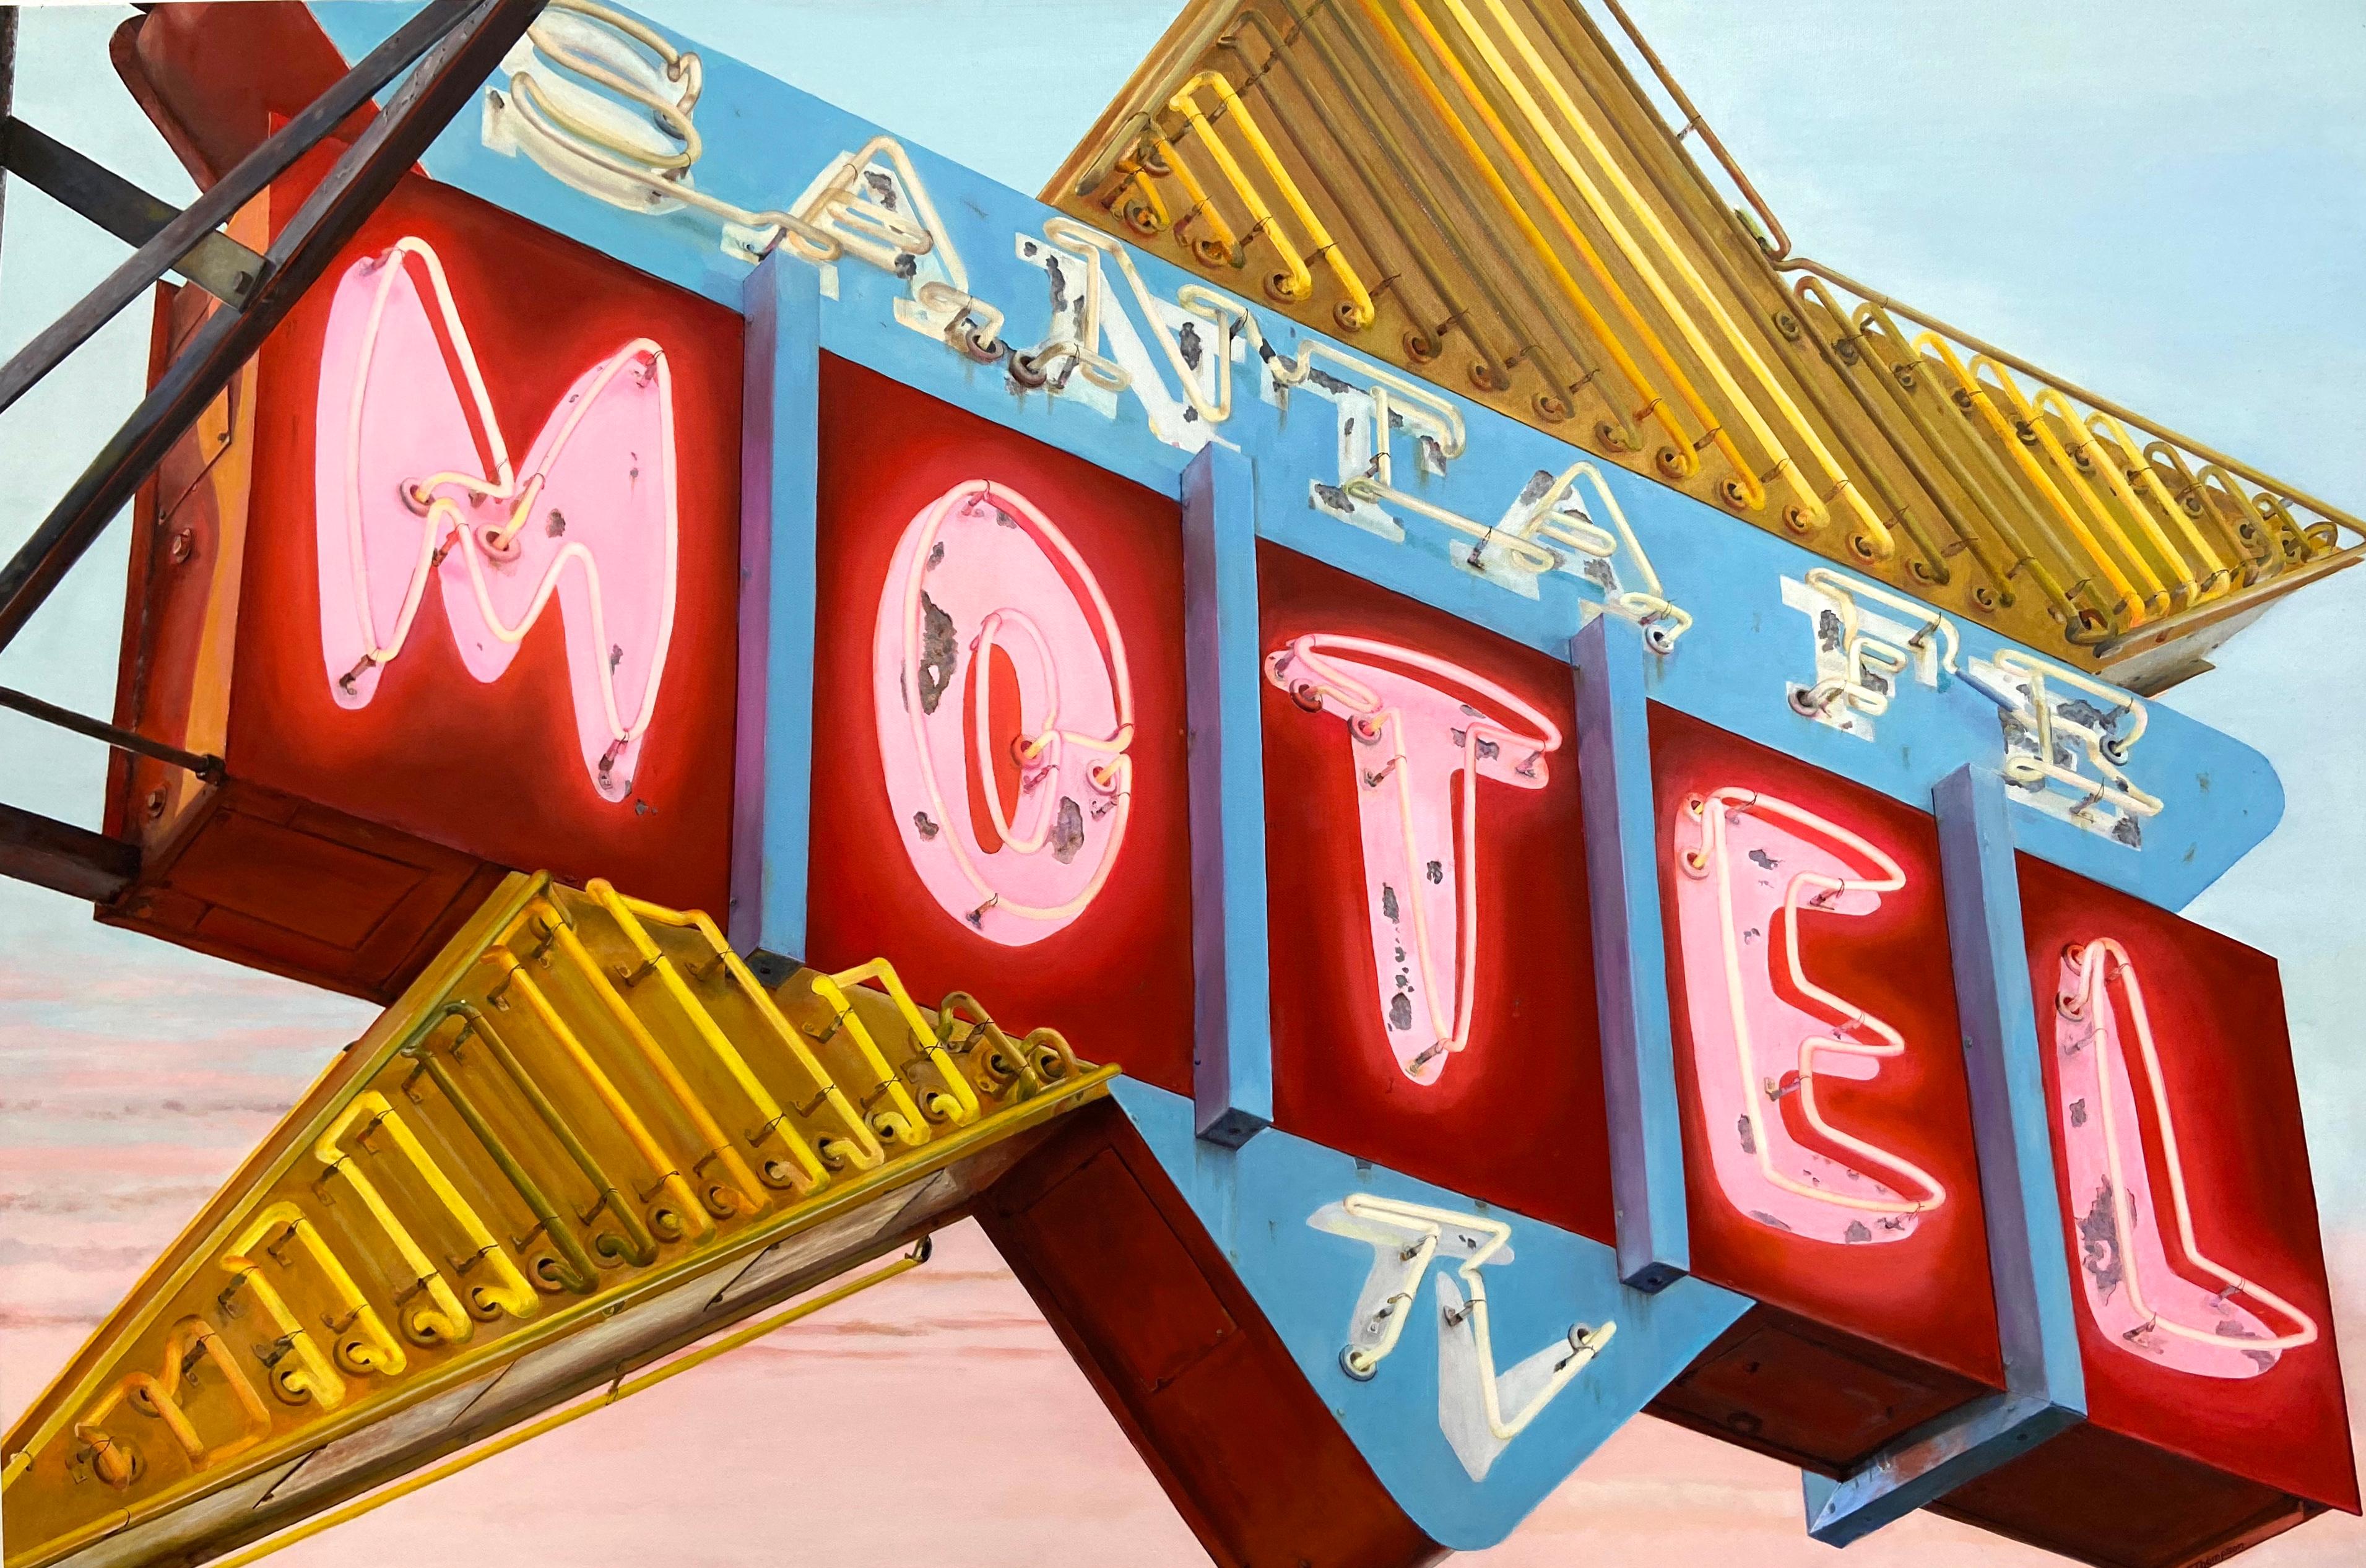 Santa Fe Motel - Painting by Terry Thompson